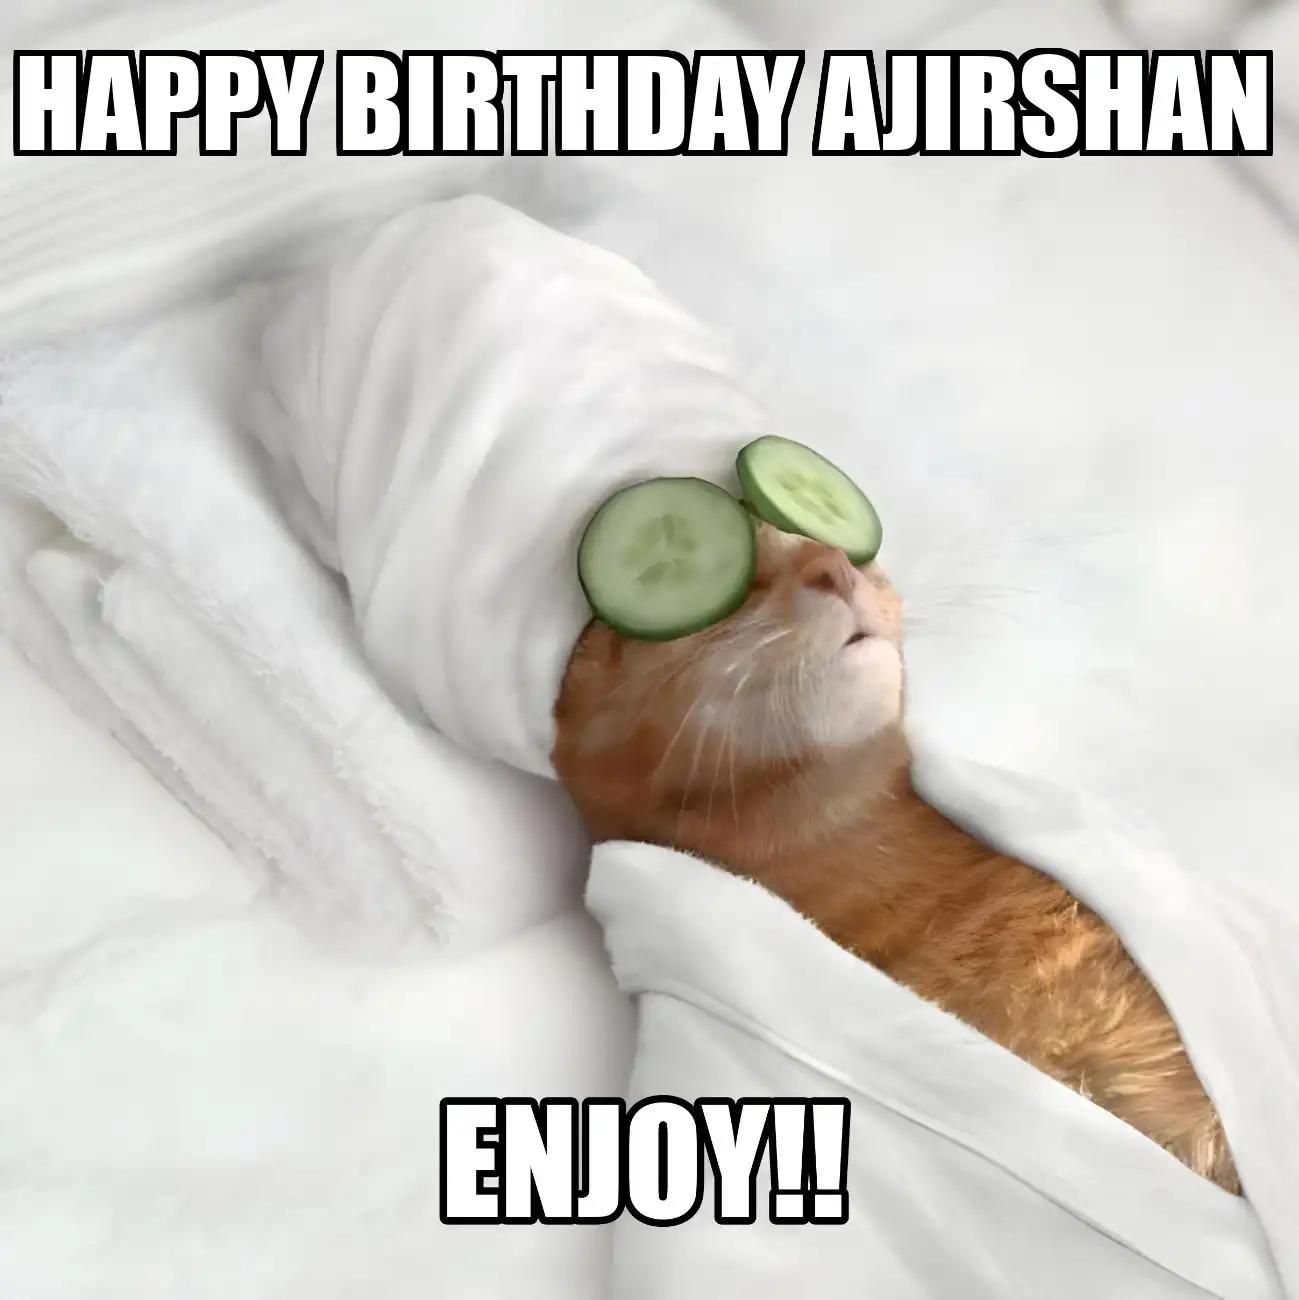 Happy Birthday Ajirshan Enjoy Cat Meme